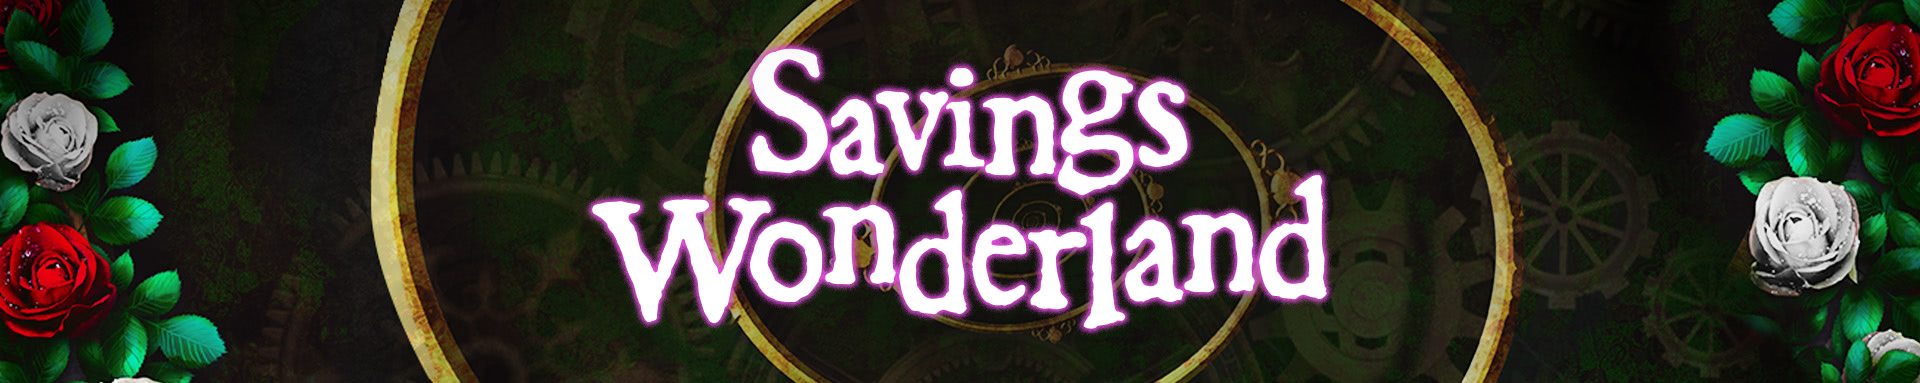 Savings Wonderland